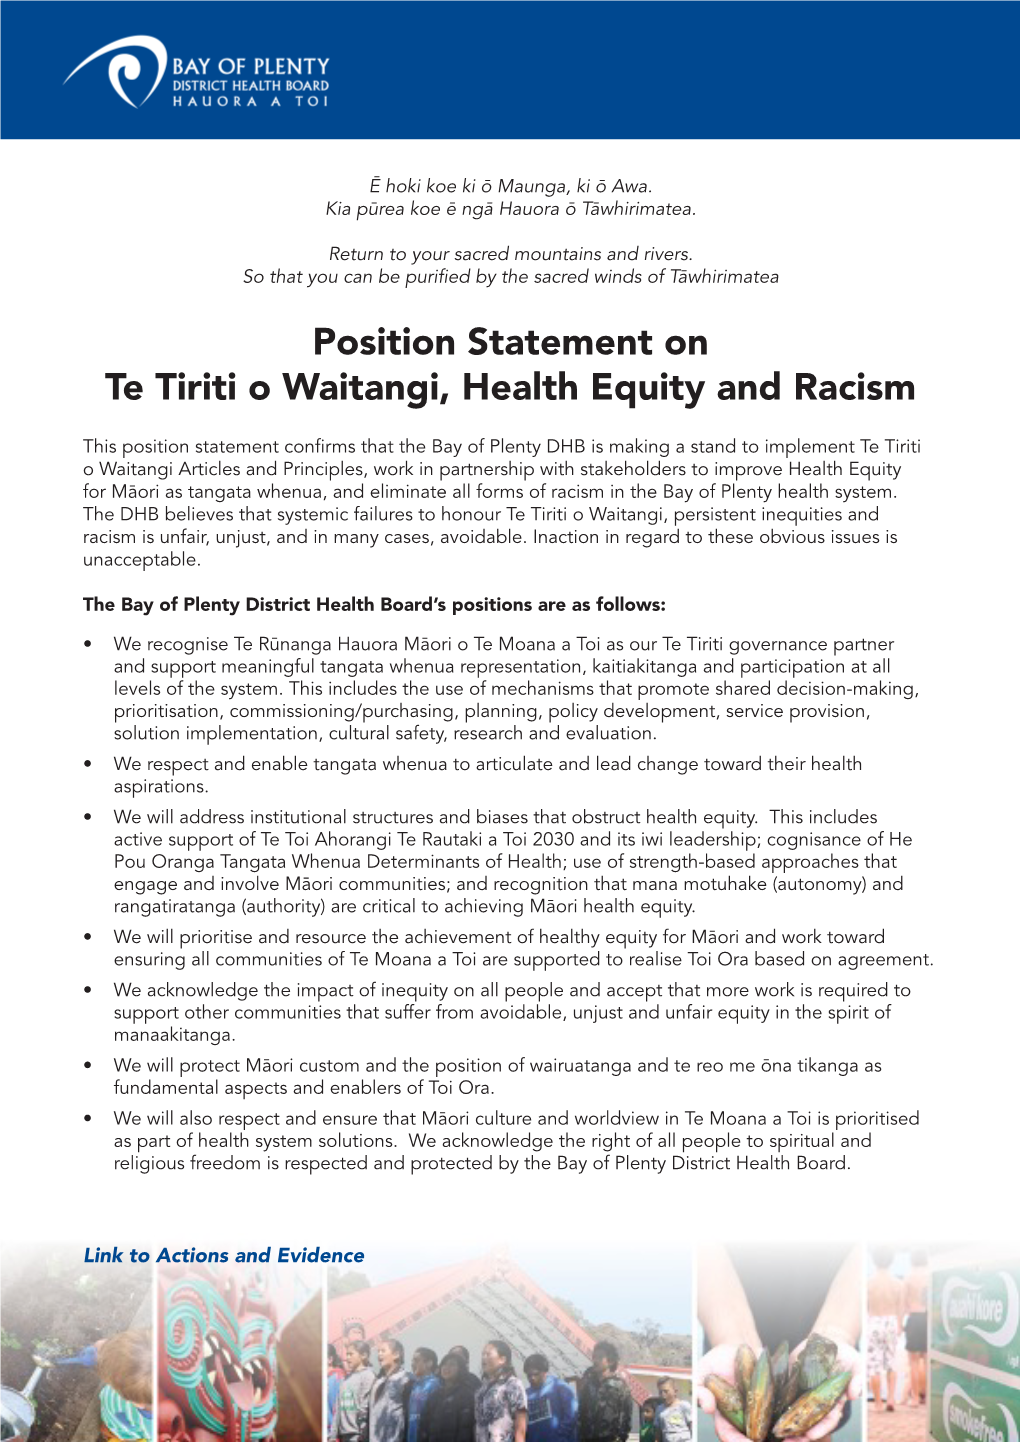 Position Statement on Te Tiriti O Waitangi, Health Equity and Racism